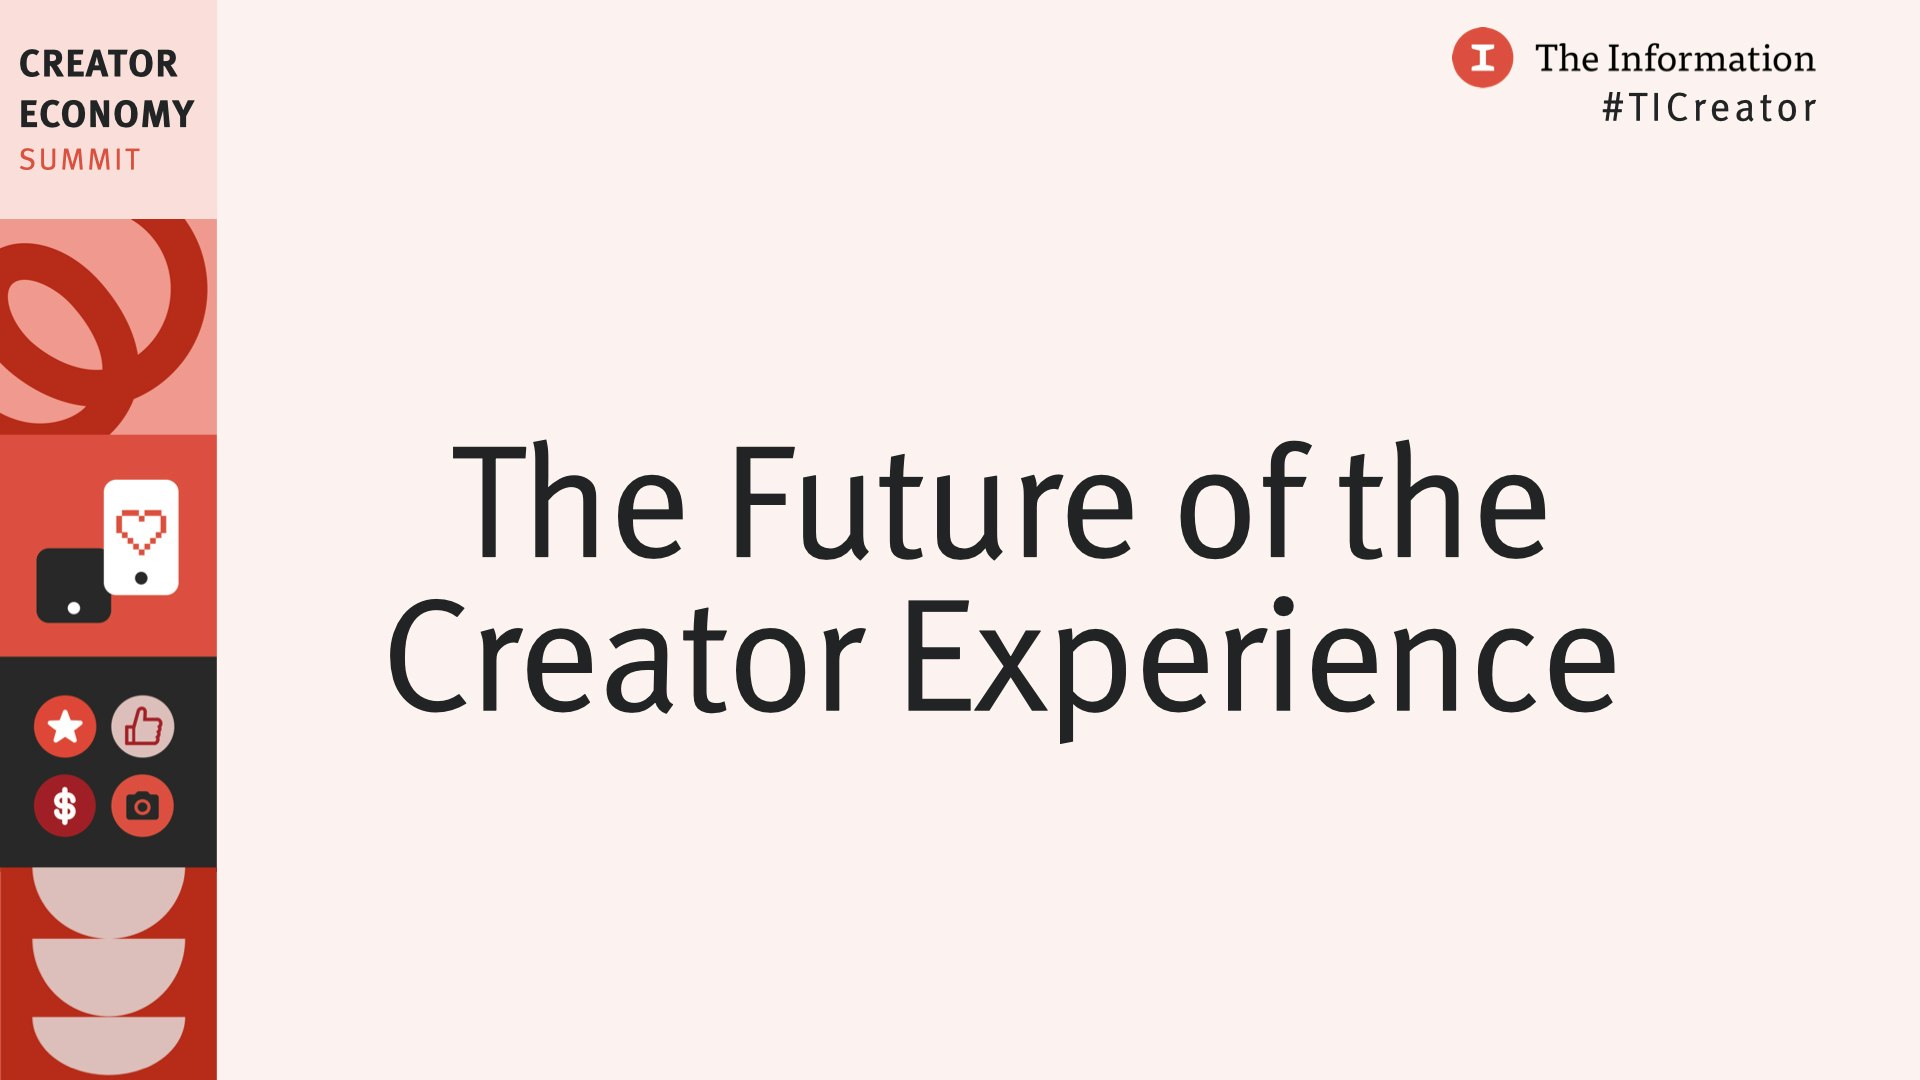 Creator Economy Summit 2021 The Future of the Creator Experience